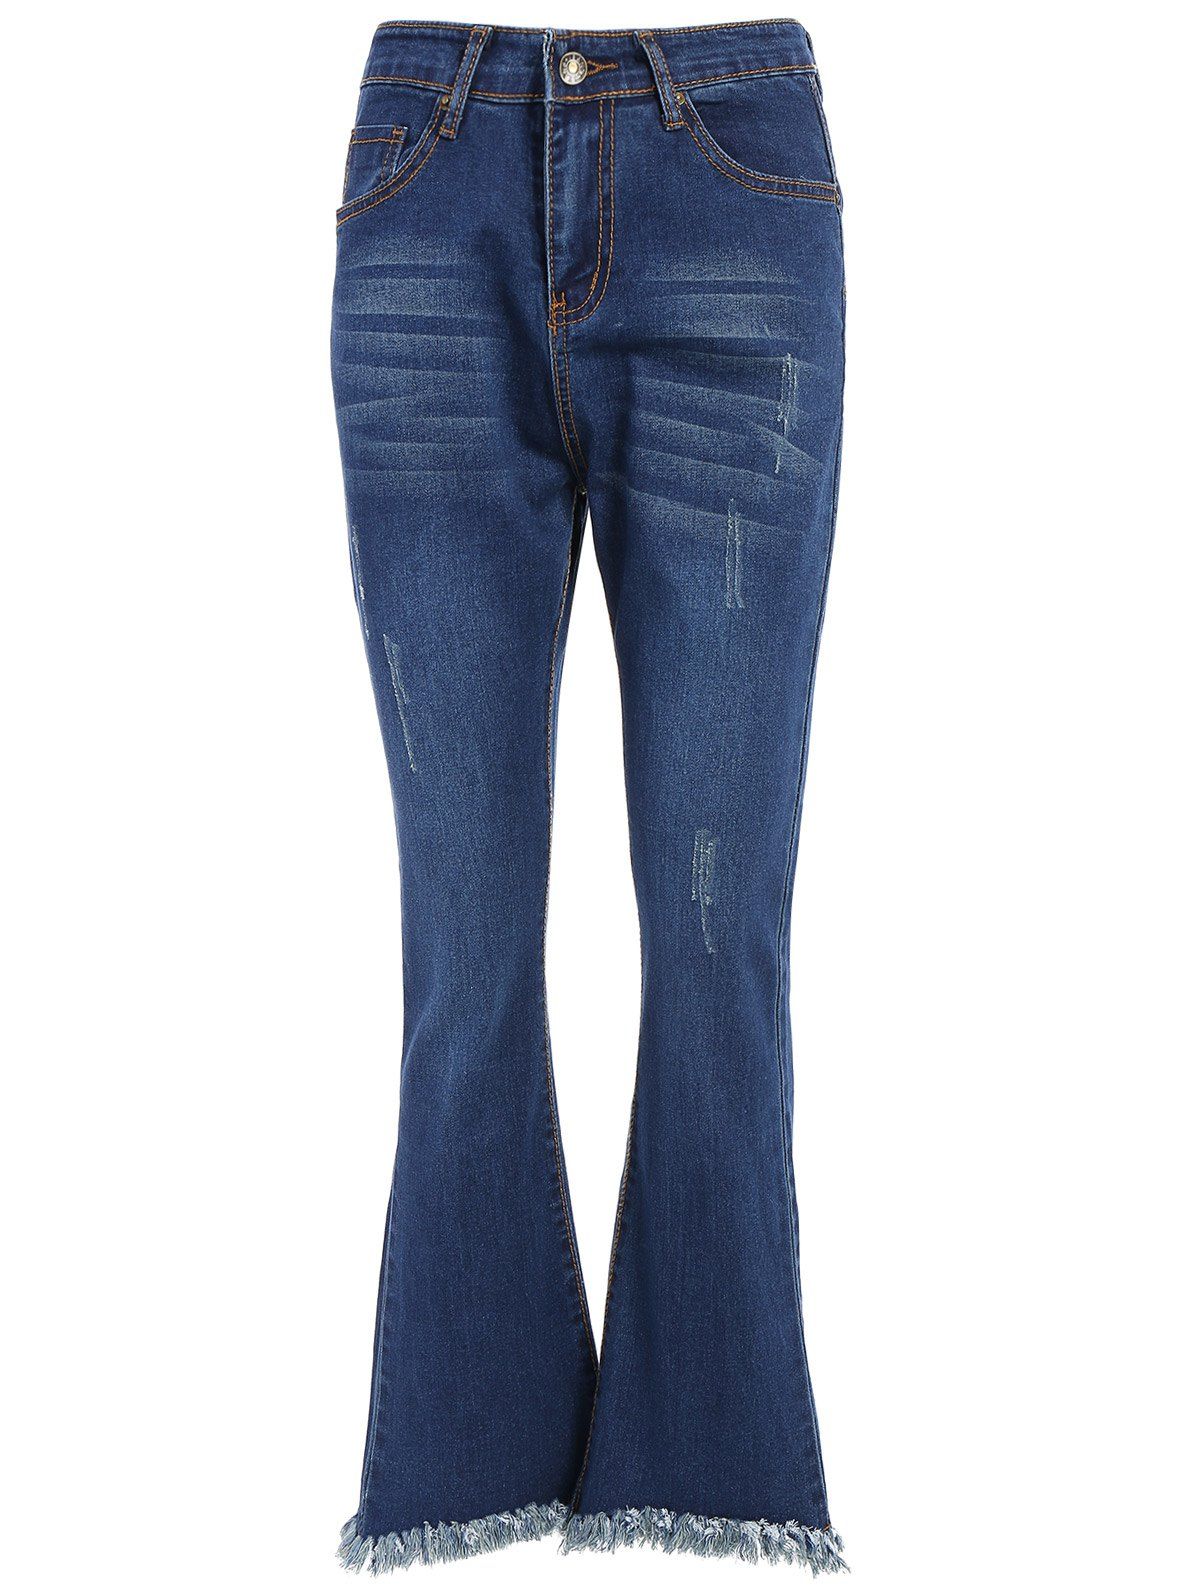 [41% OFF] 2021 High Waisted Fringed Bell-Bottom Jeans In BLUE | DressLily